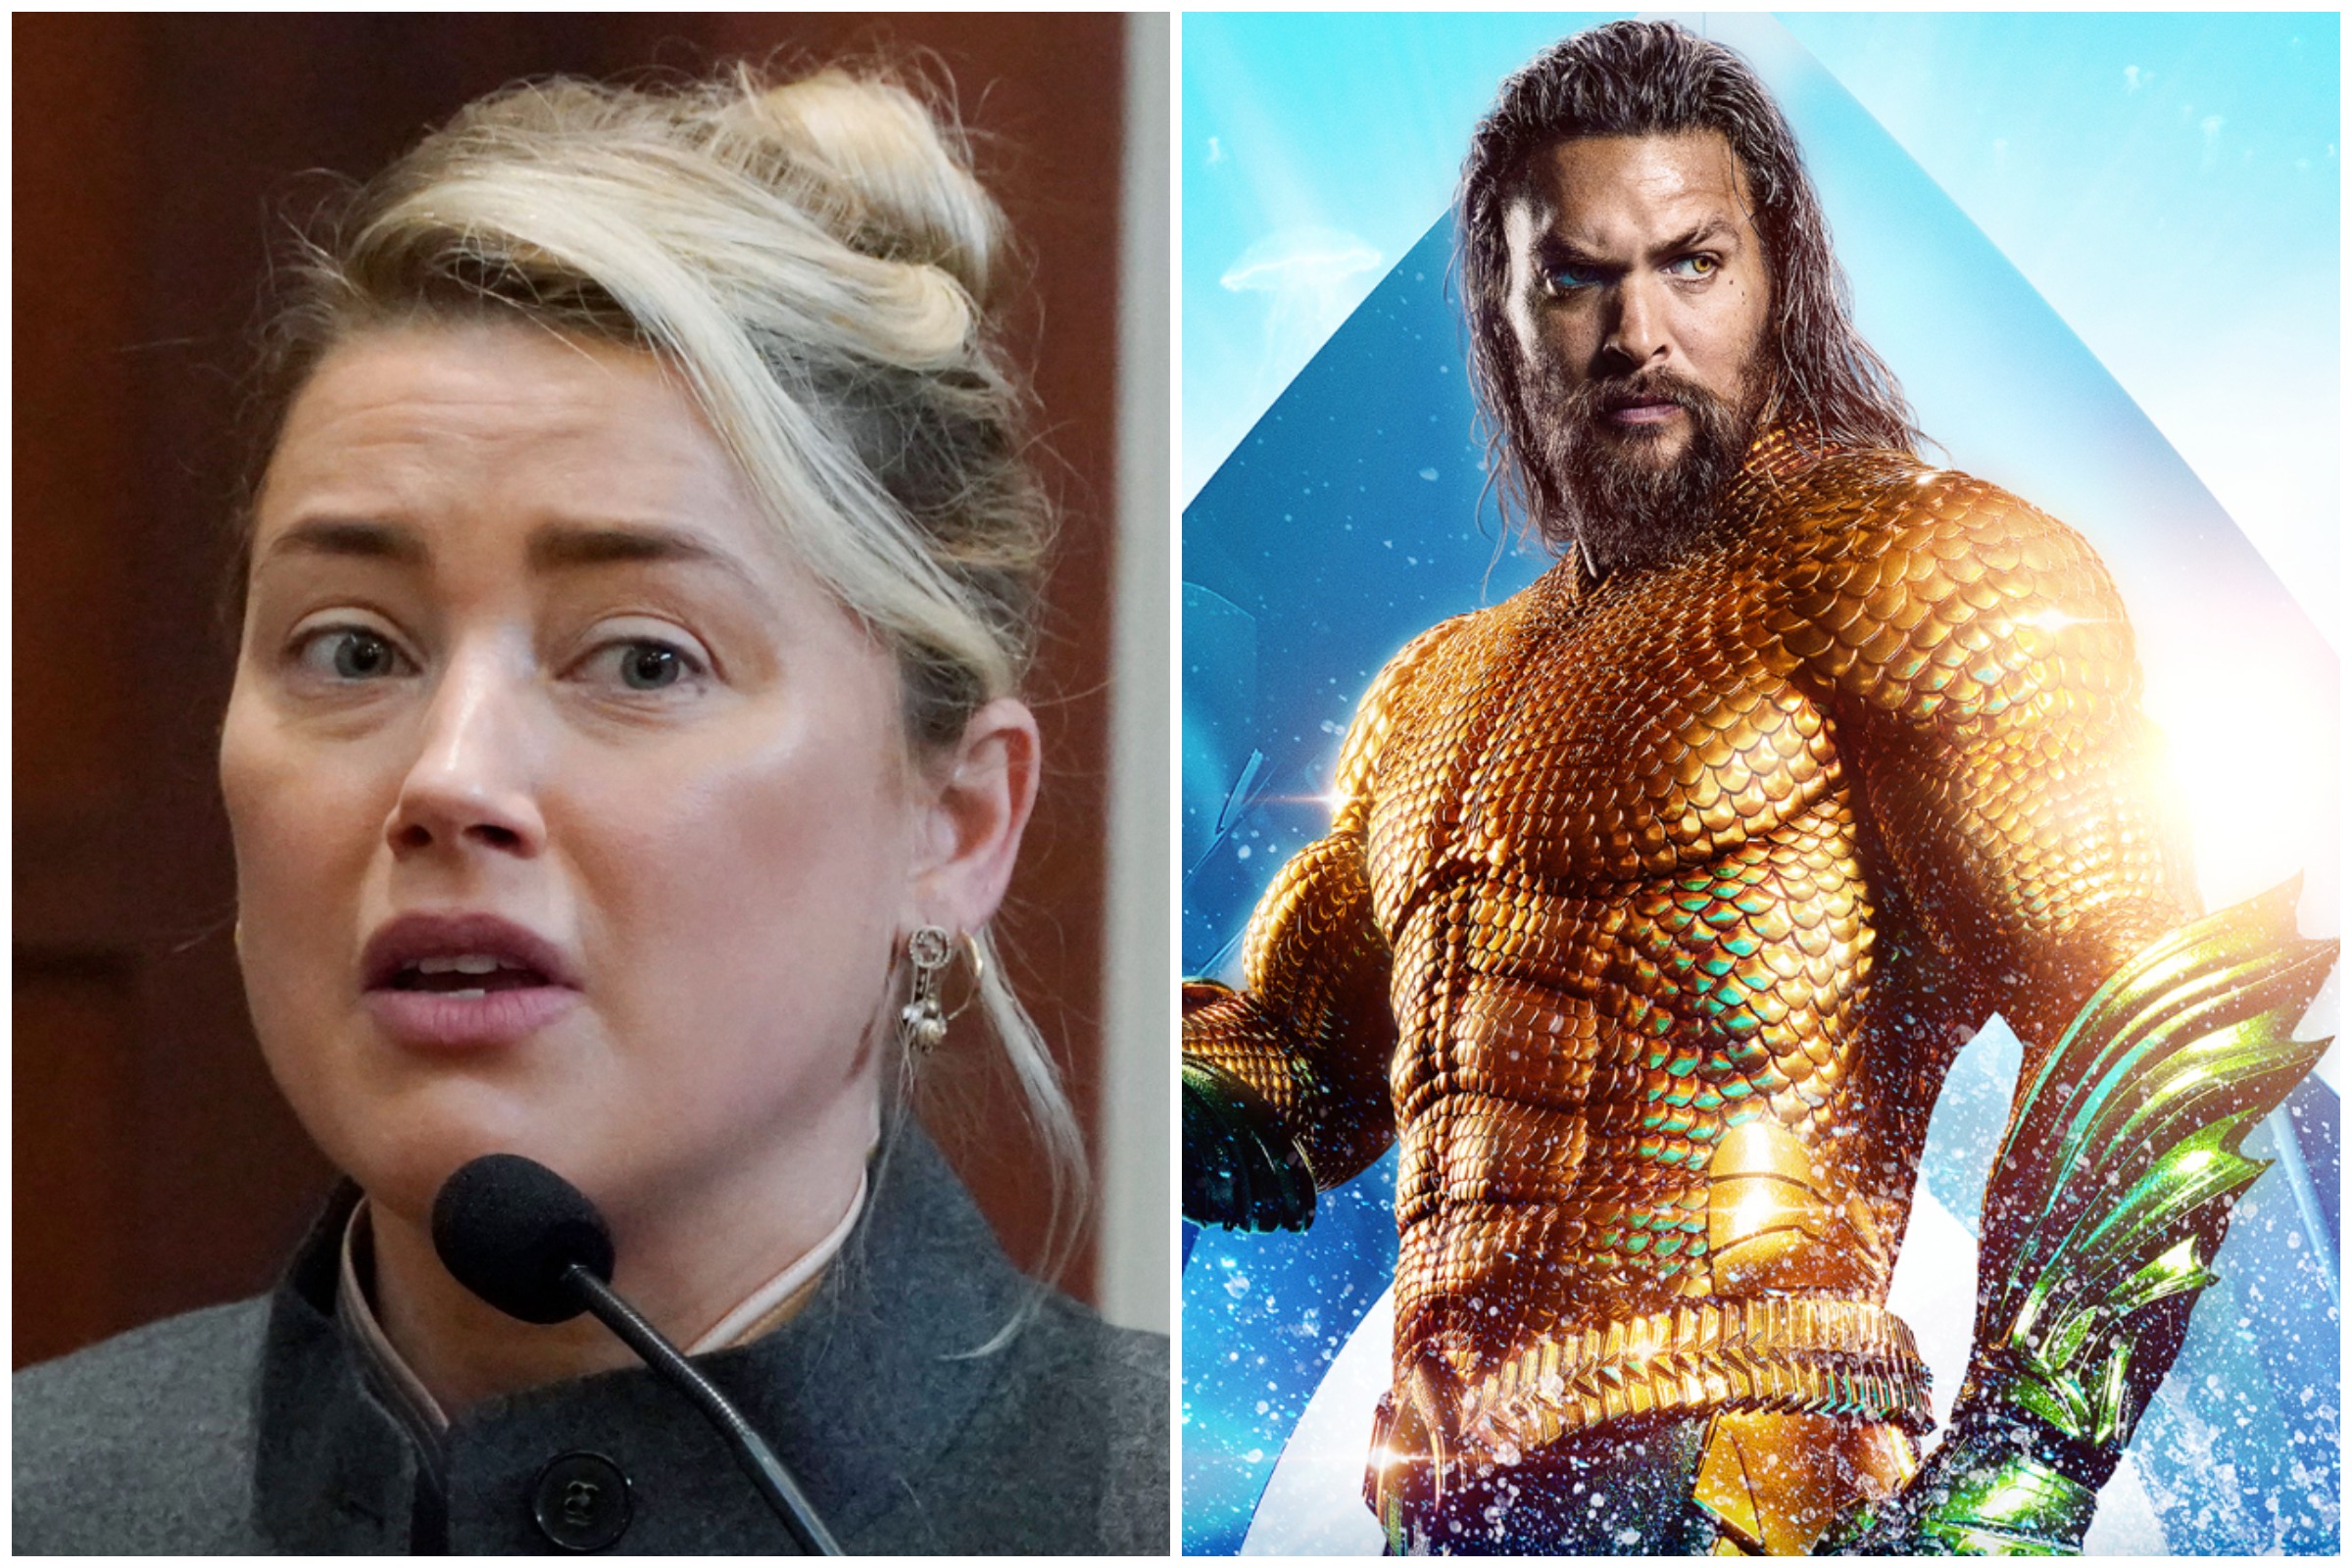 Report: Amber Heard's 'Aquaman' sequel role not reduced